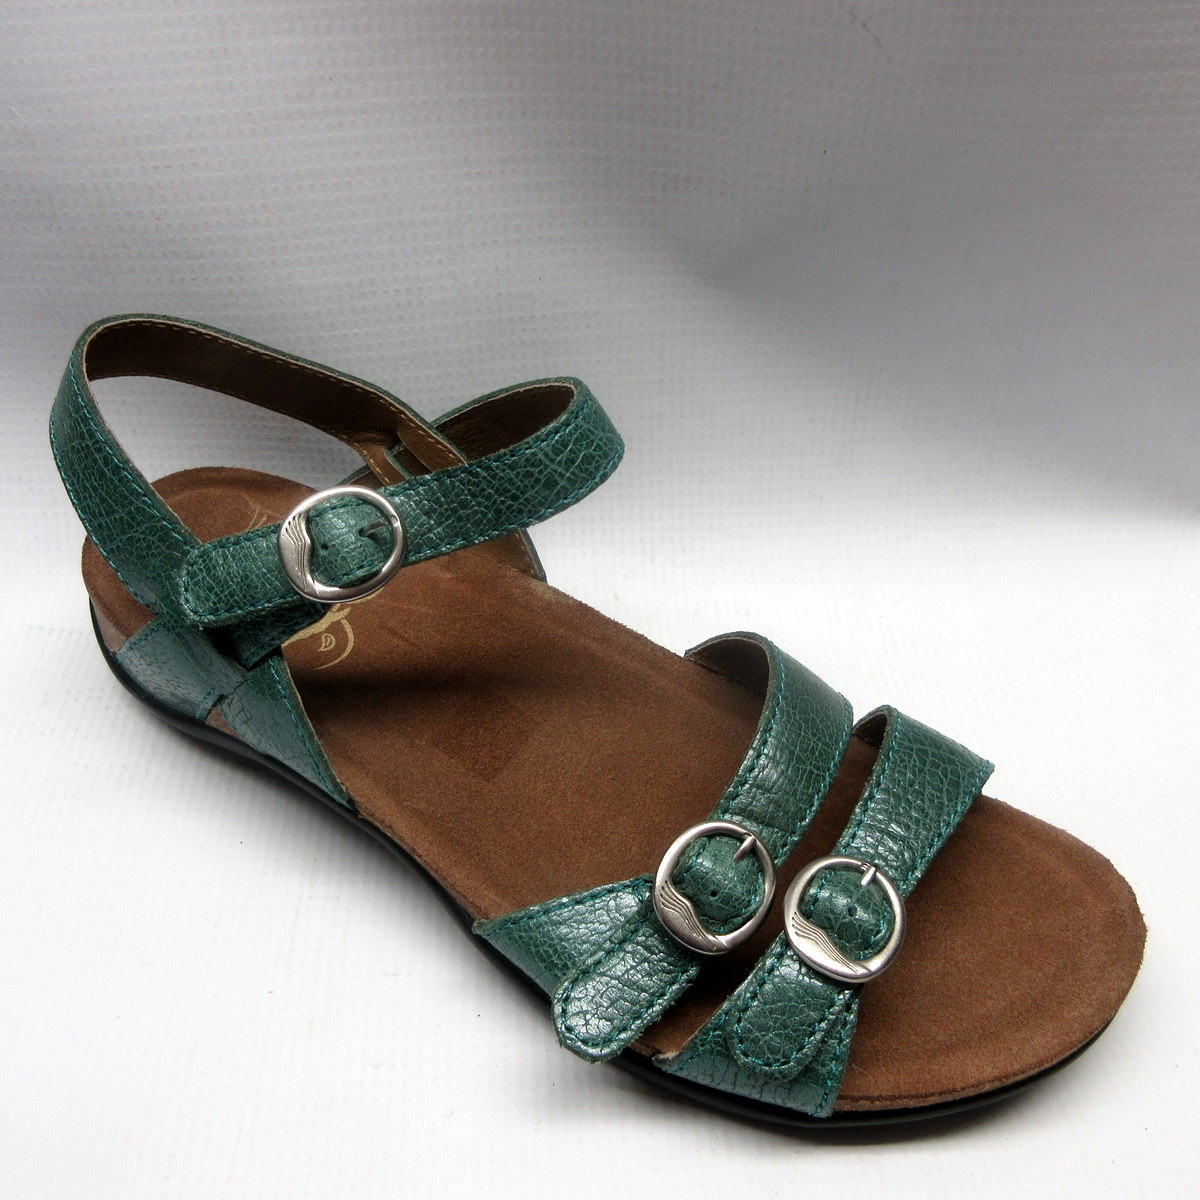 dansko sandals size 38